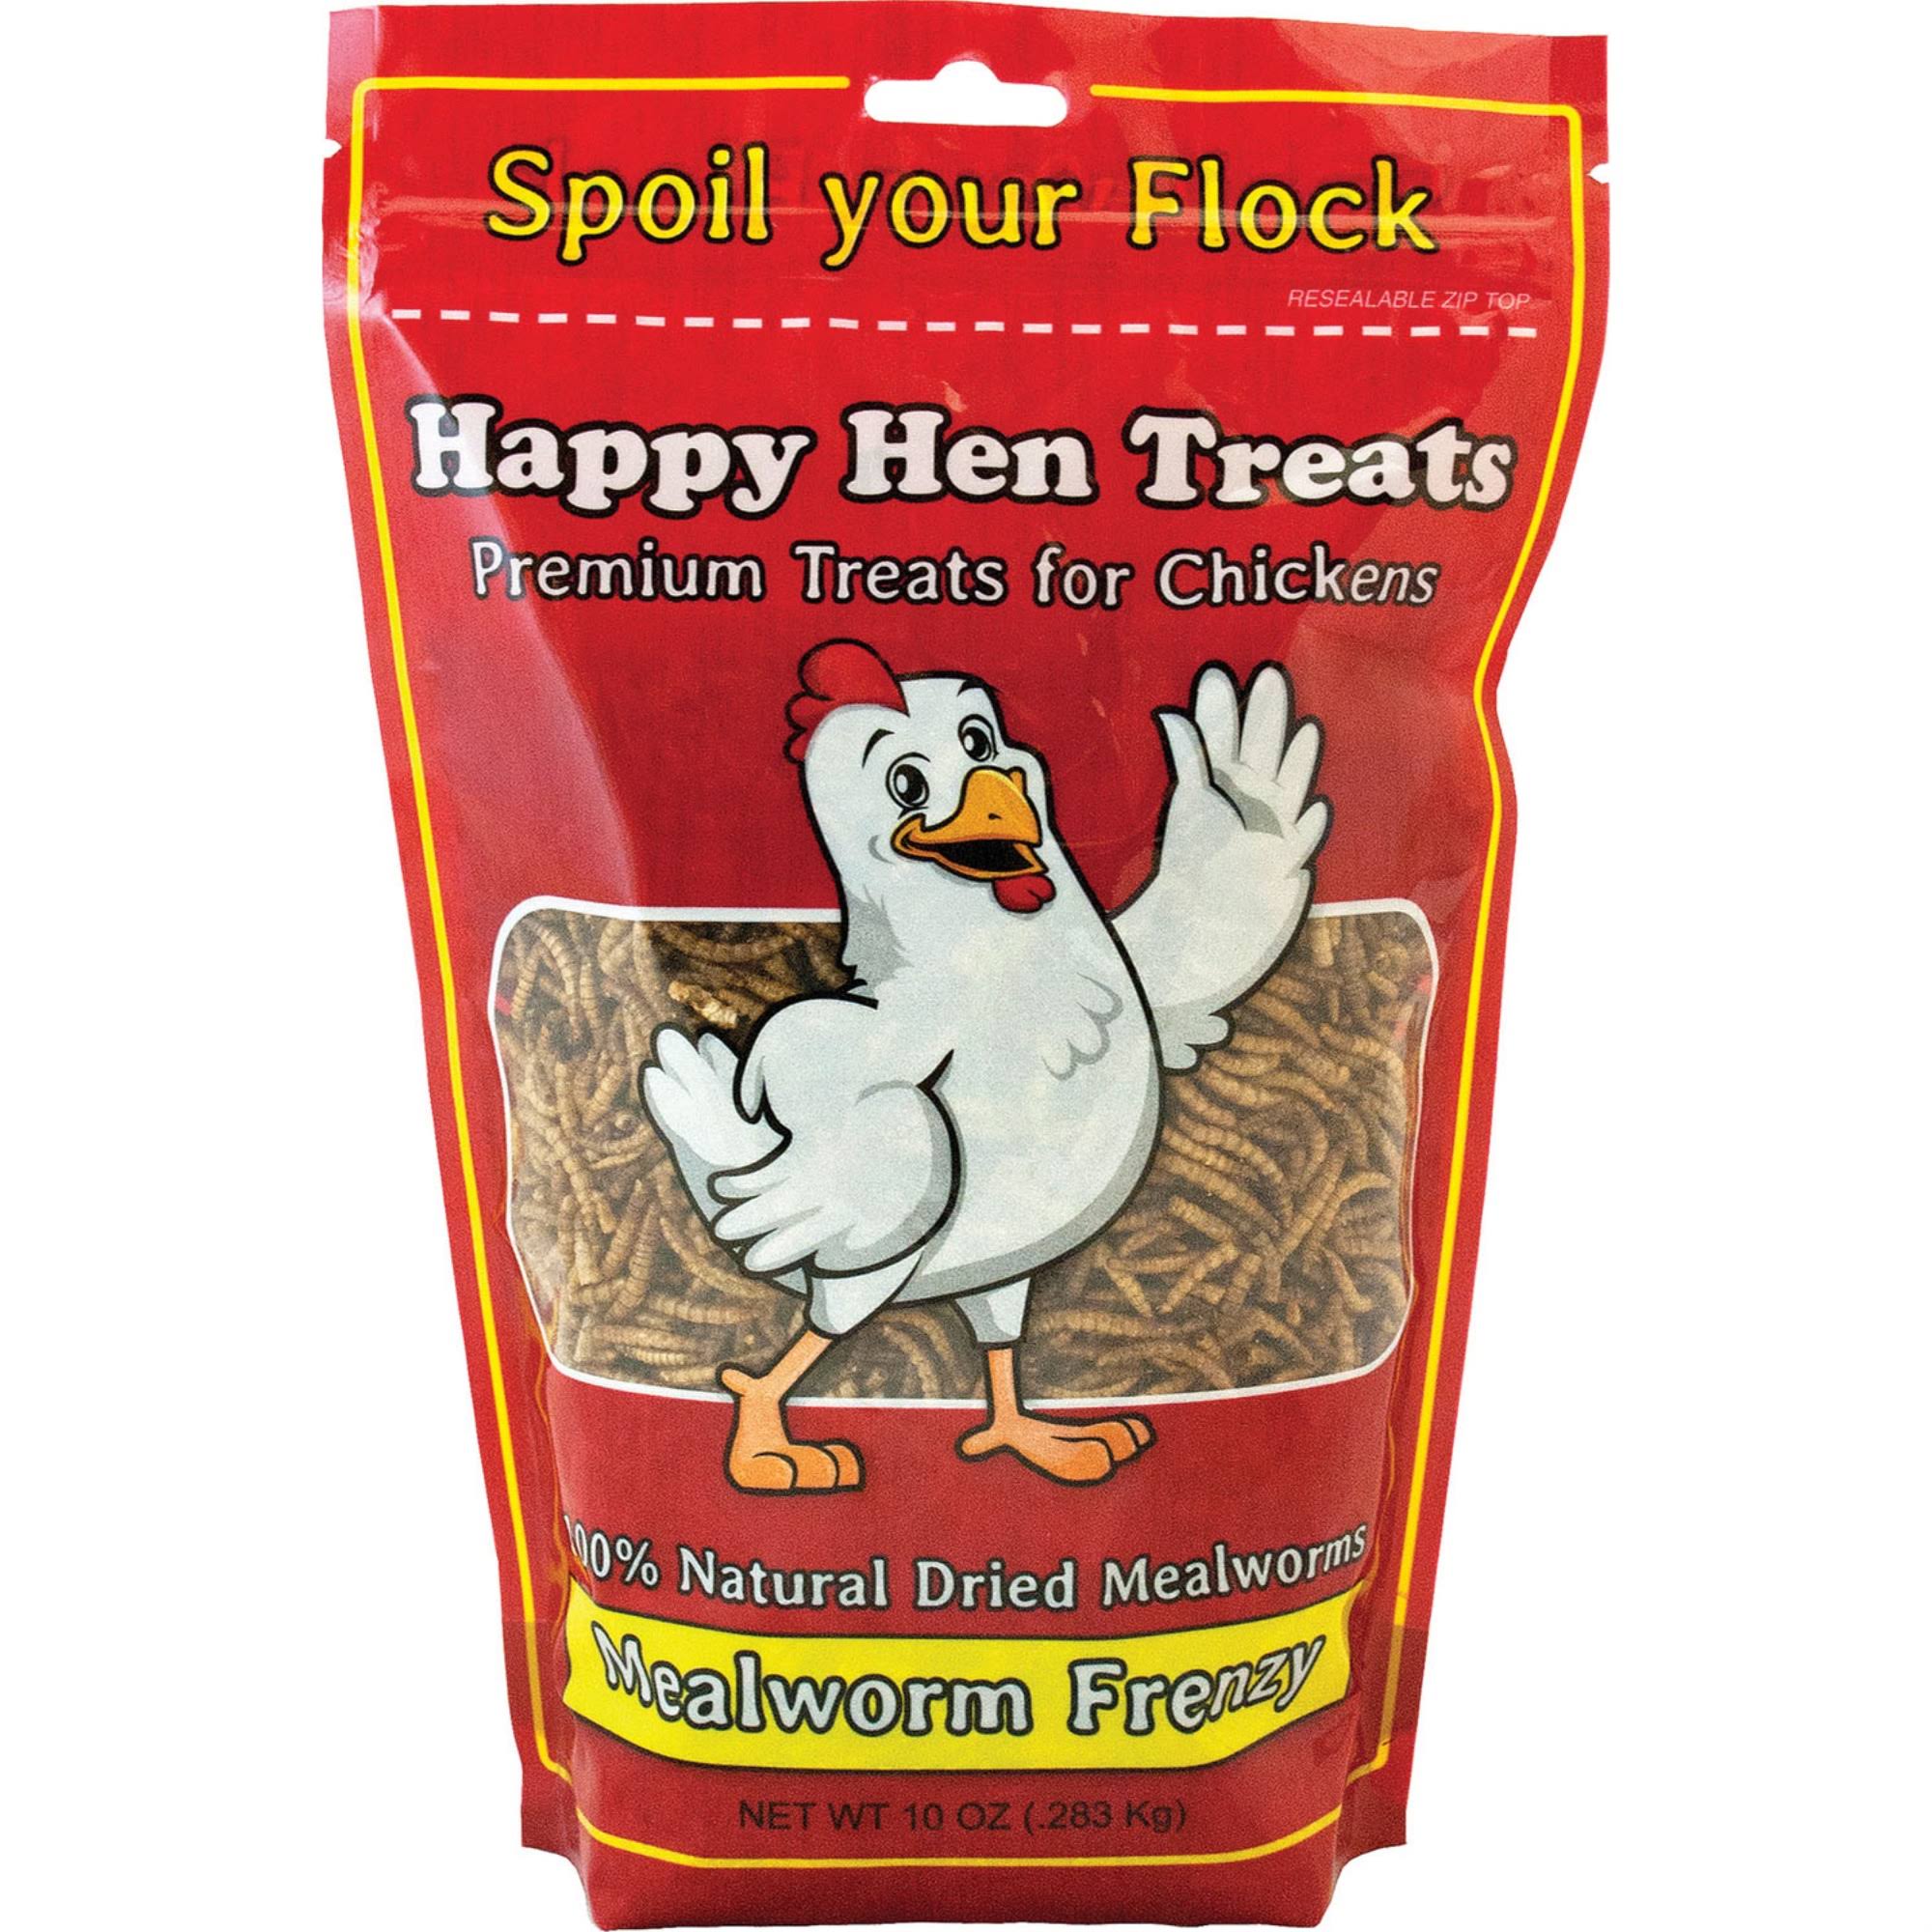 Happy Hen Treats Mealworm Frenzy Chicken Treat - 10oz